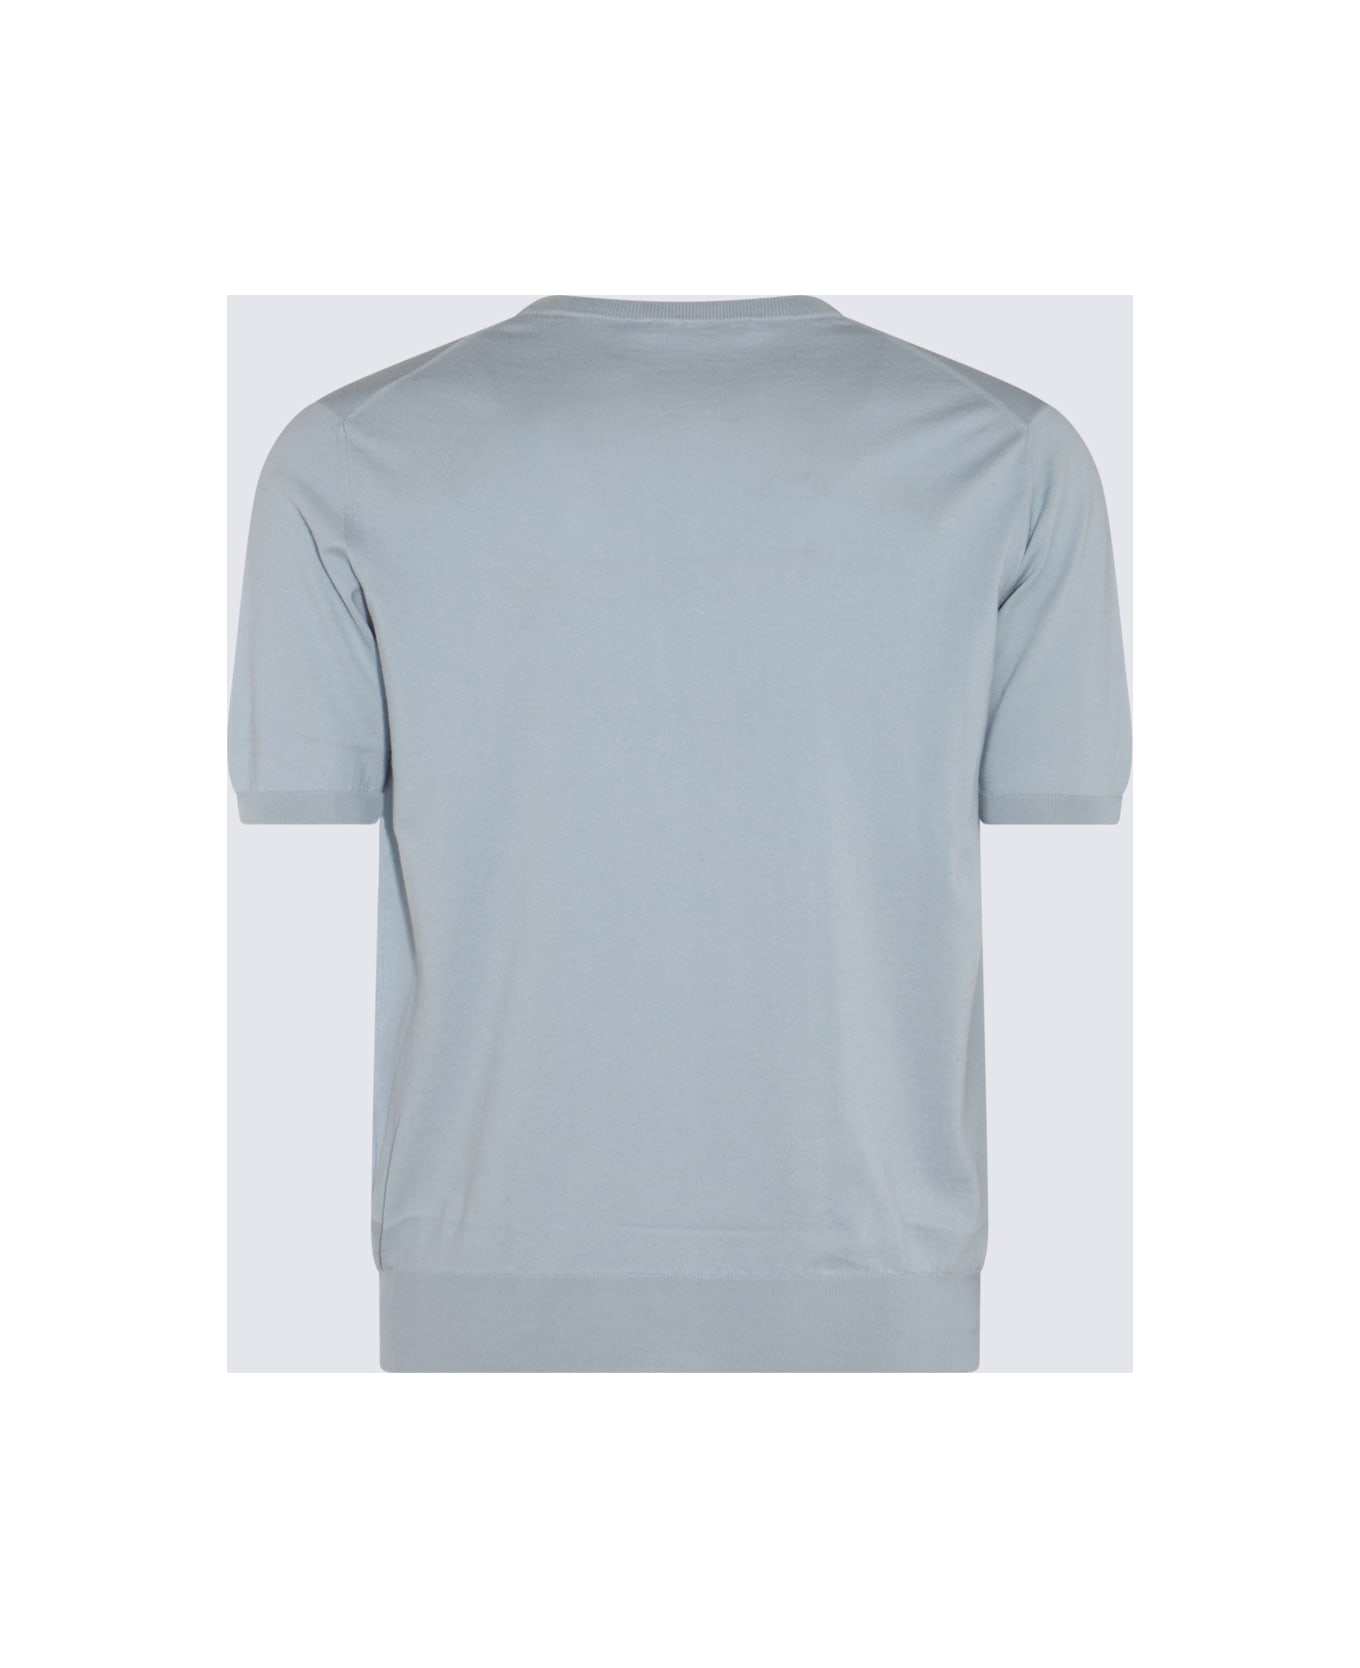 Cruciani Light Blue Cotton T-shirt - Cielo シャツ